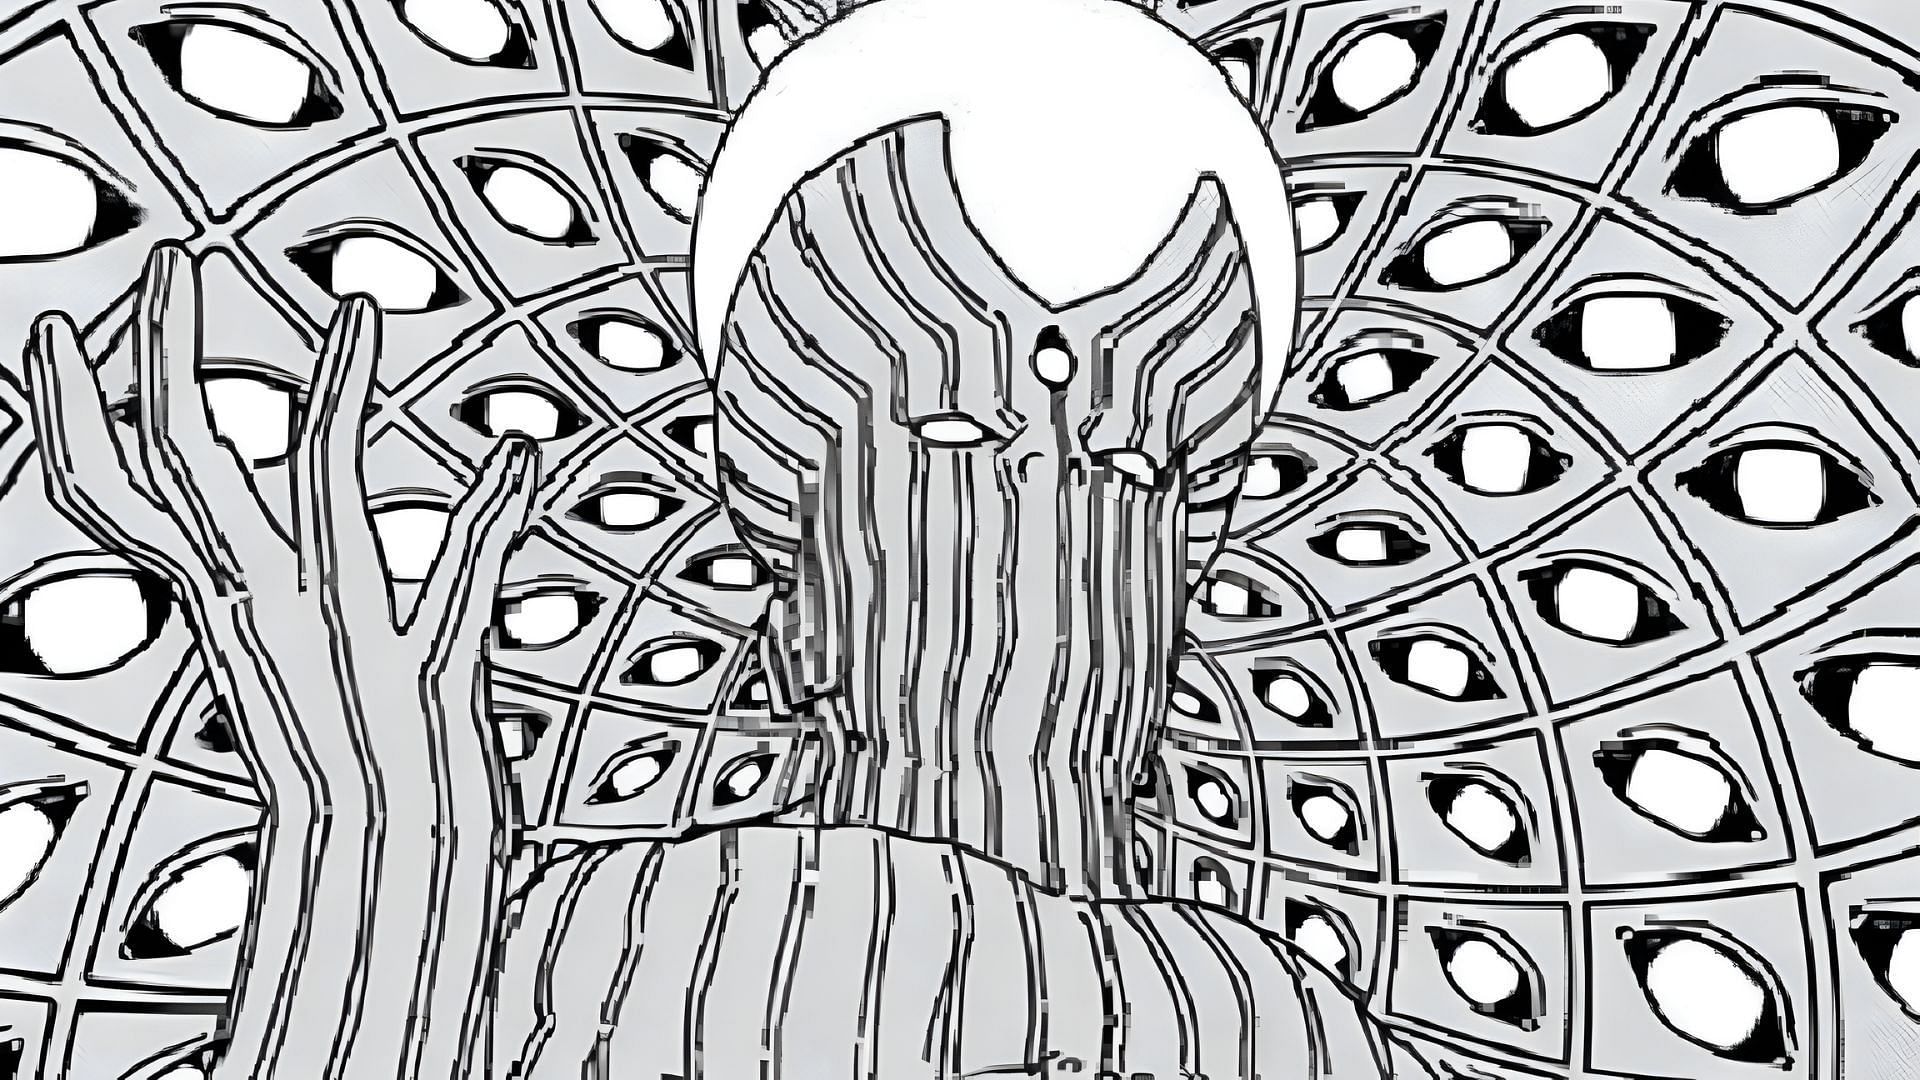 Otsutsuki God as seen in the Boruto manga (Image via Shueisha)